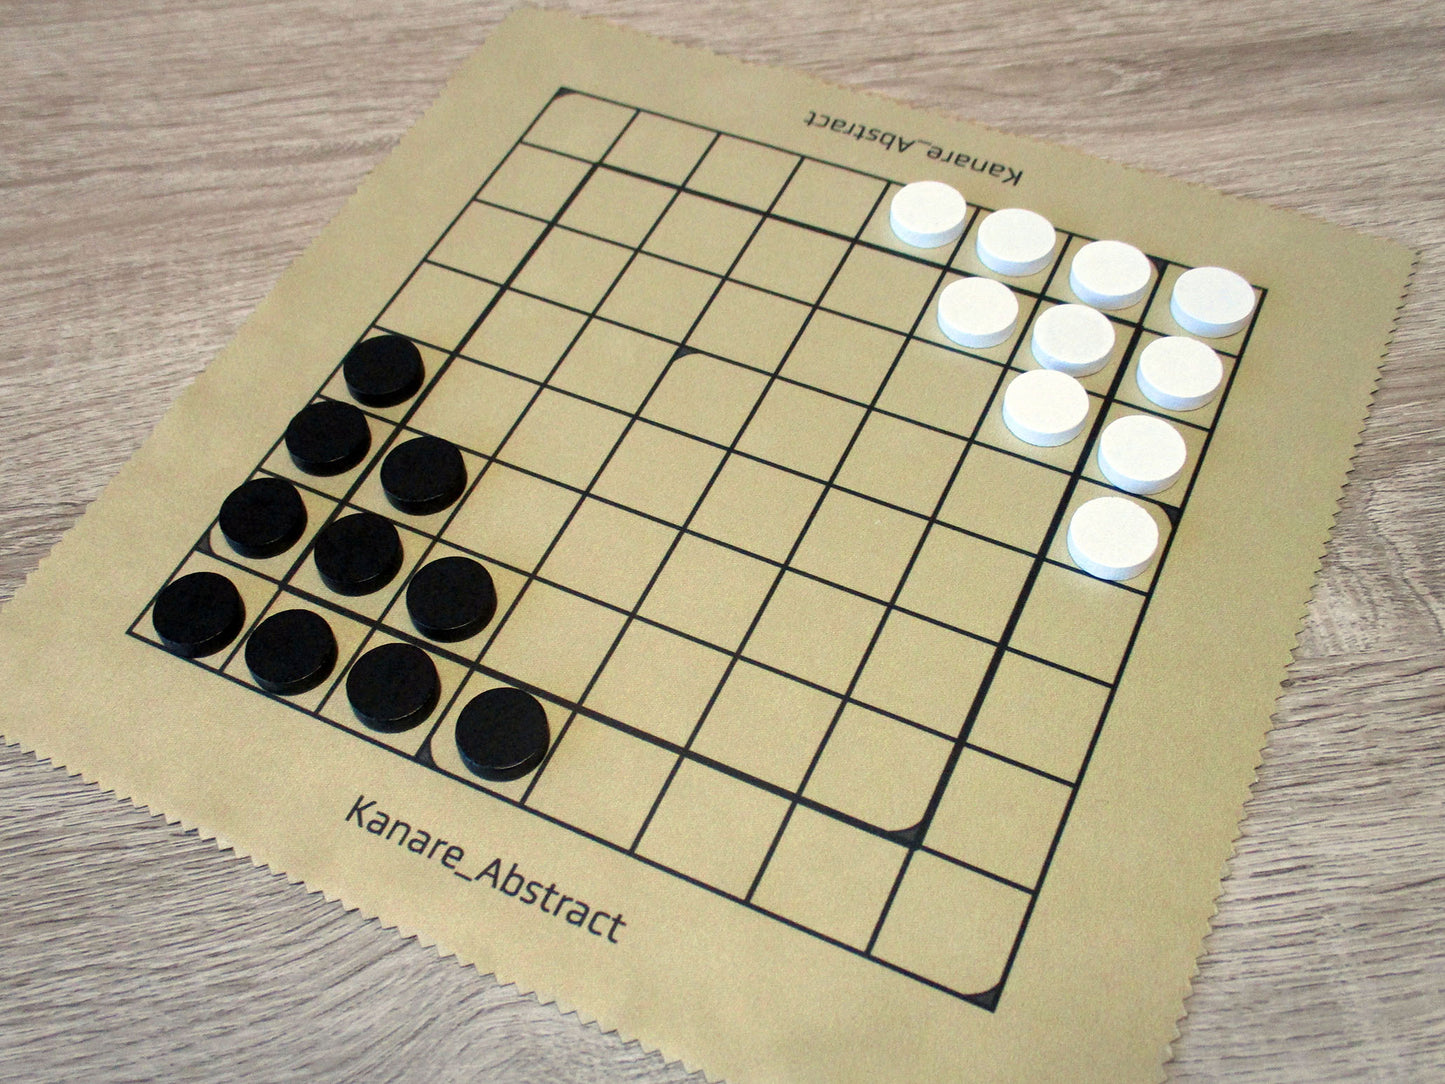 Generic Board "Square" Set